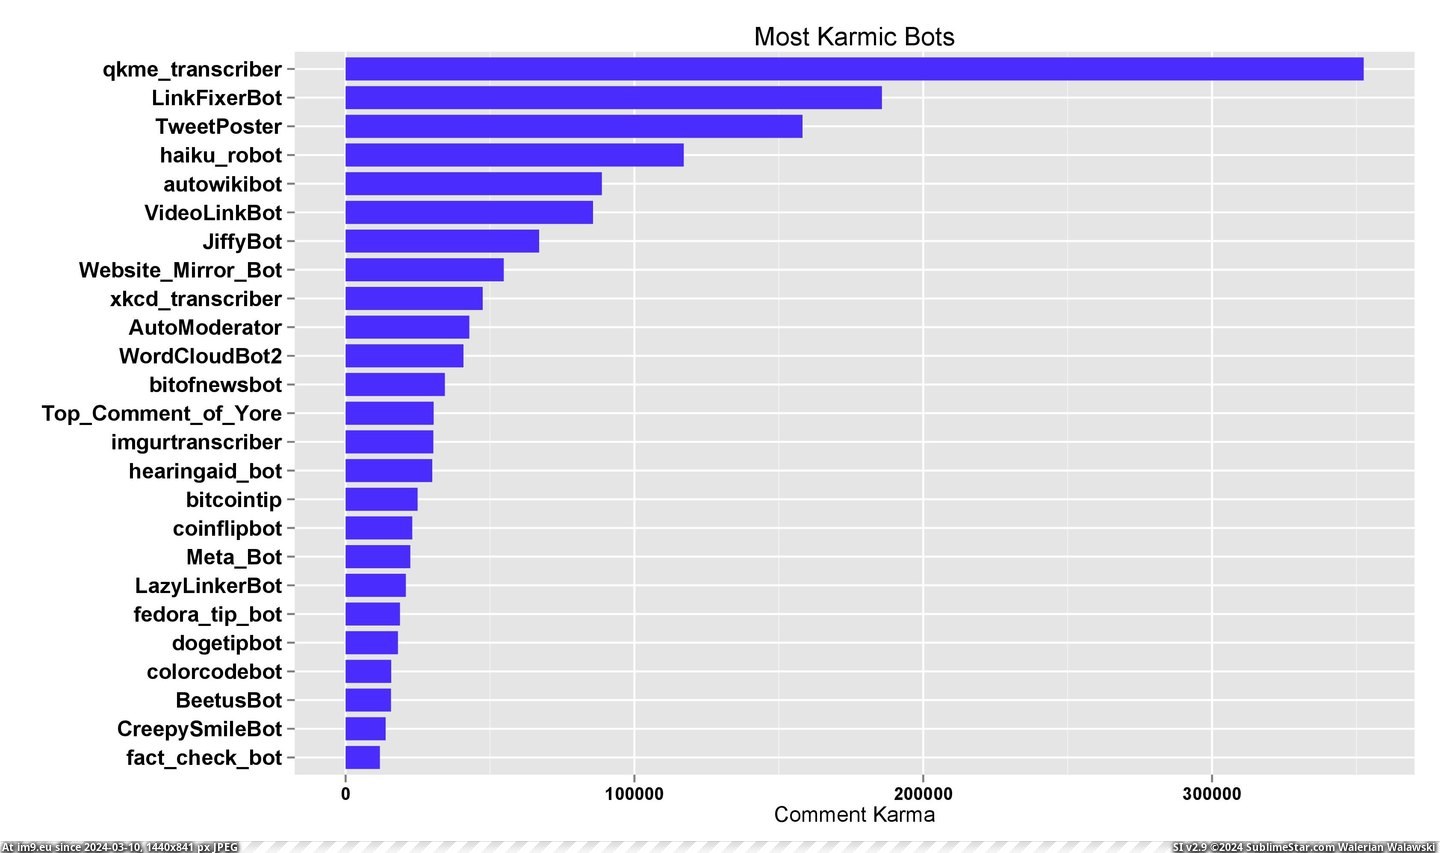 #Quality #Bots #Karmic #Higher [Dataisbeautiful] [OC] Most Karmic Reddit Bots - Higher quality 1 Pic. (Изображение из альбом My r/DATAISBEAUTIFUL favs))